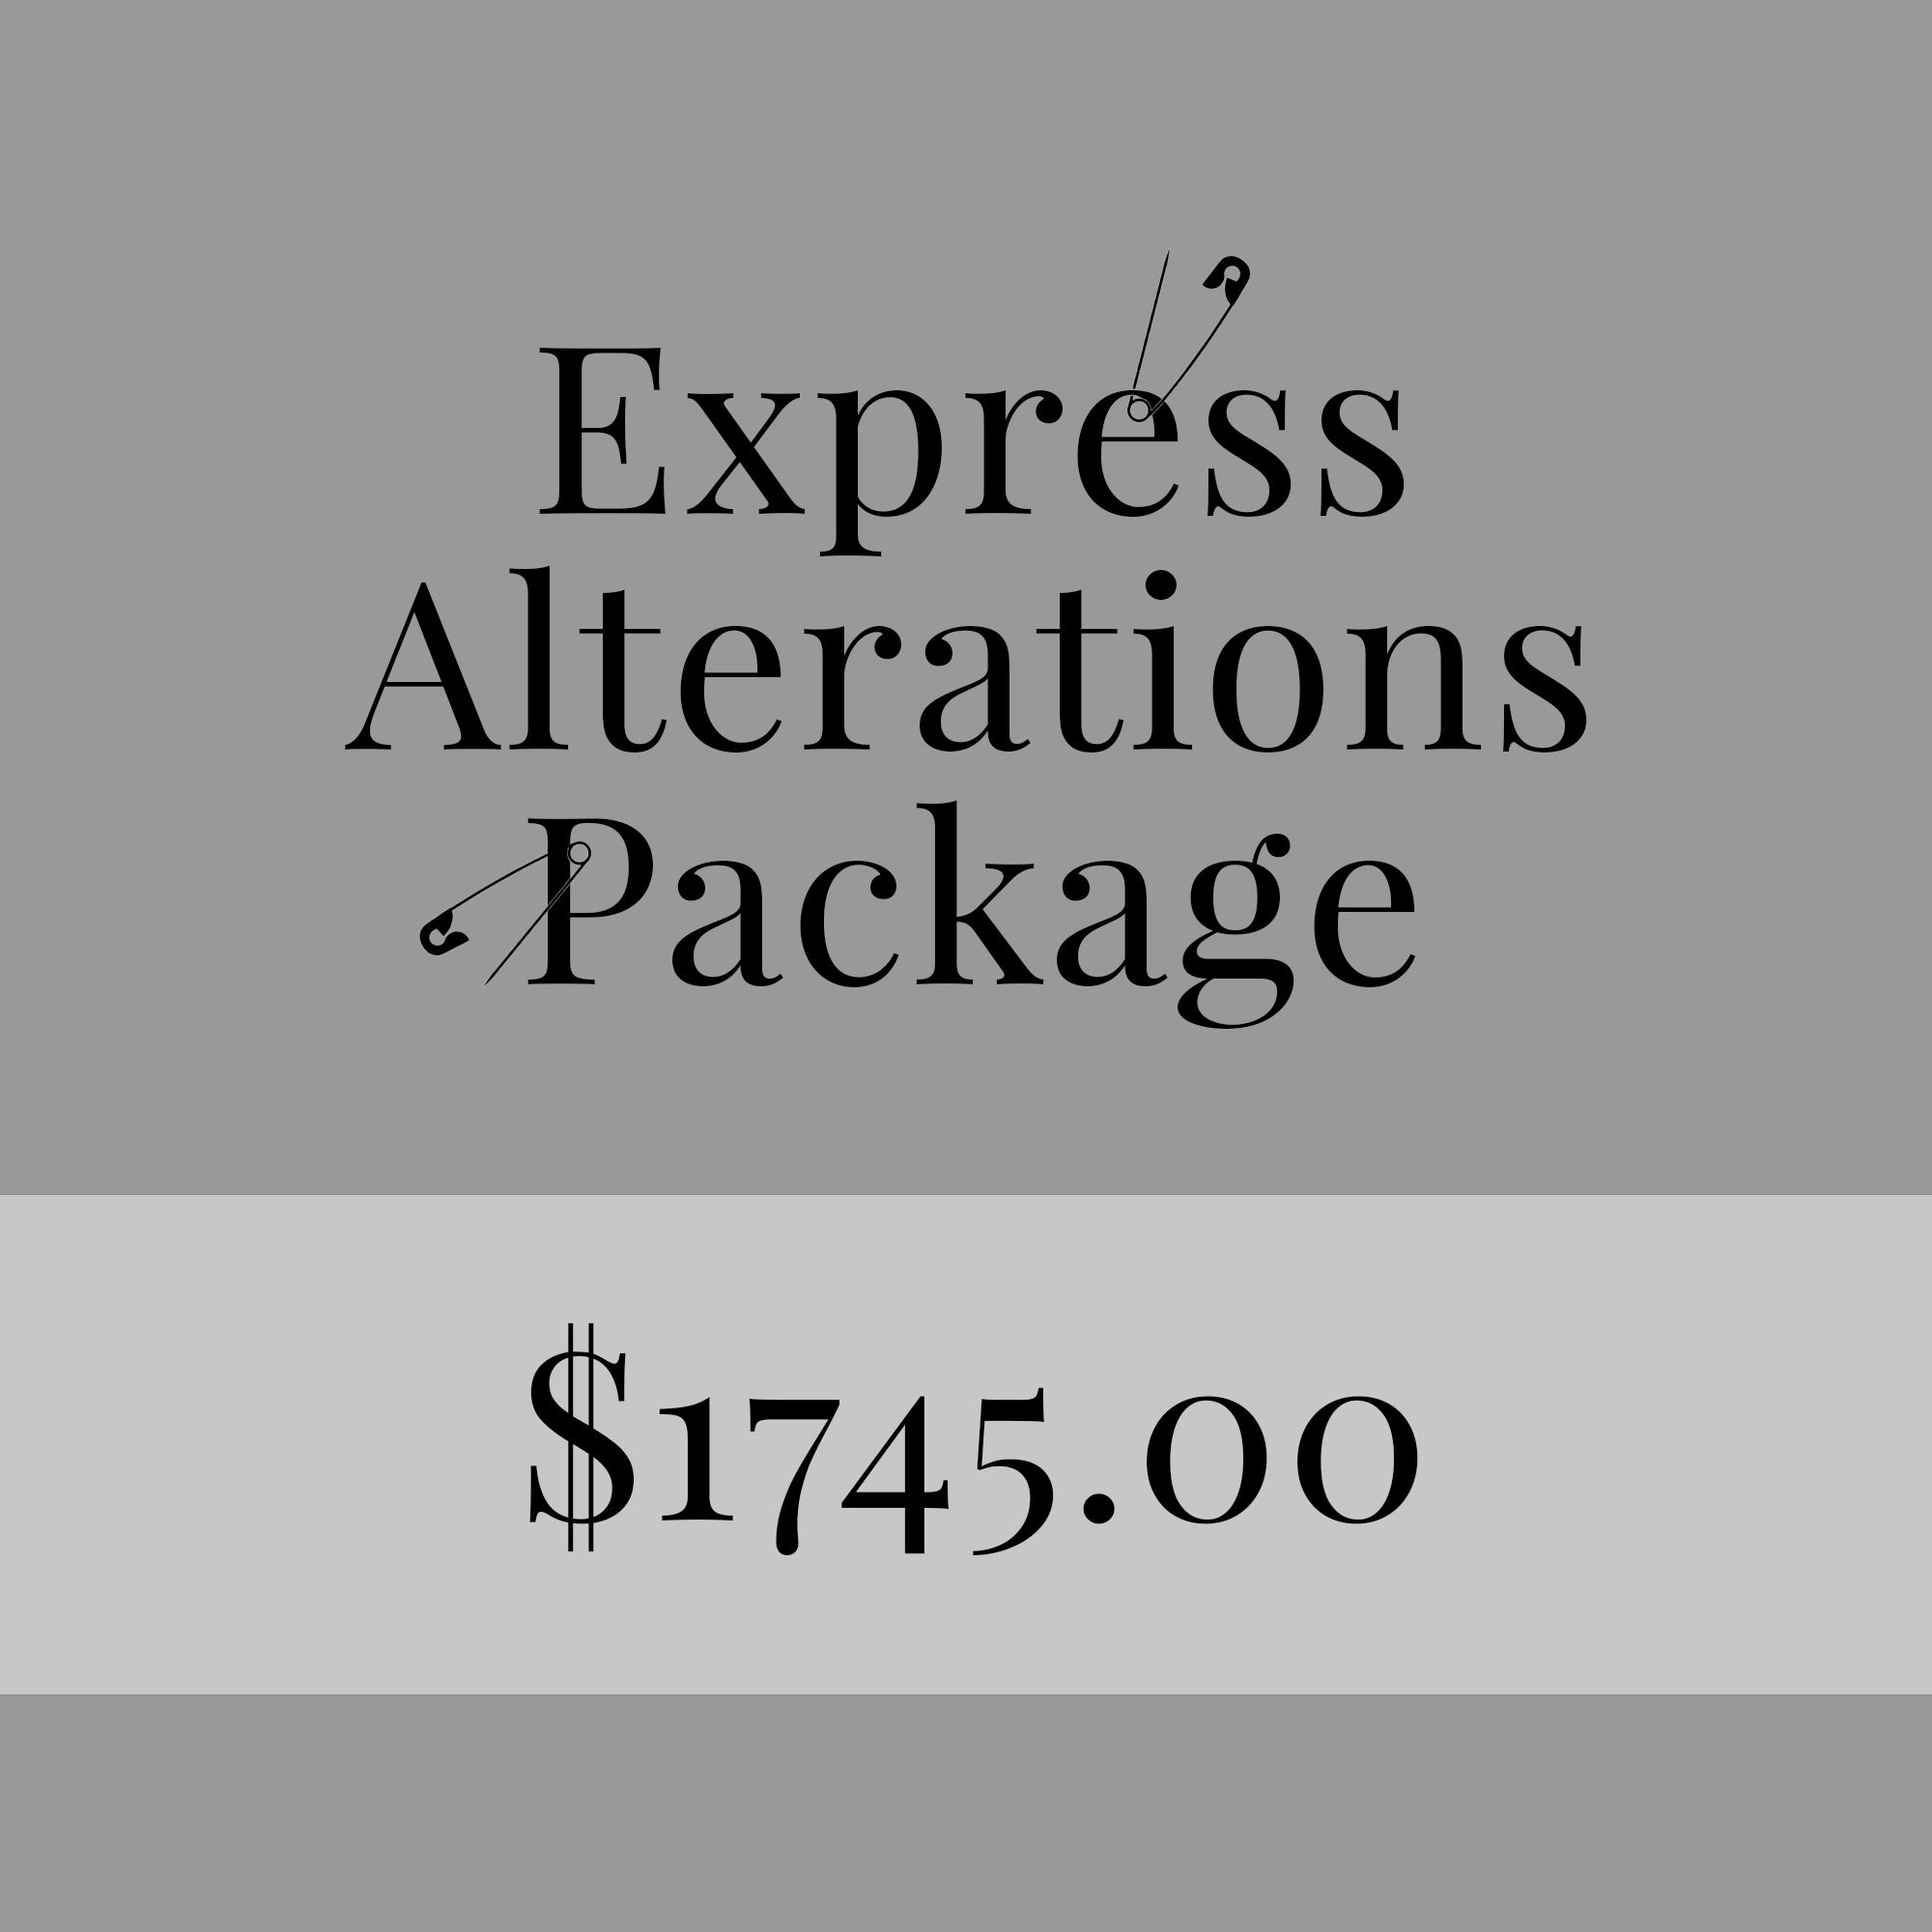 Express alterations